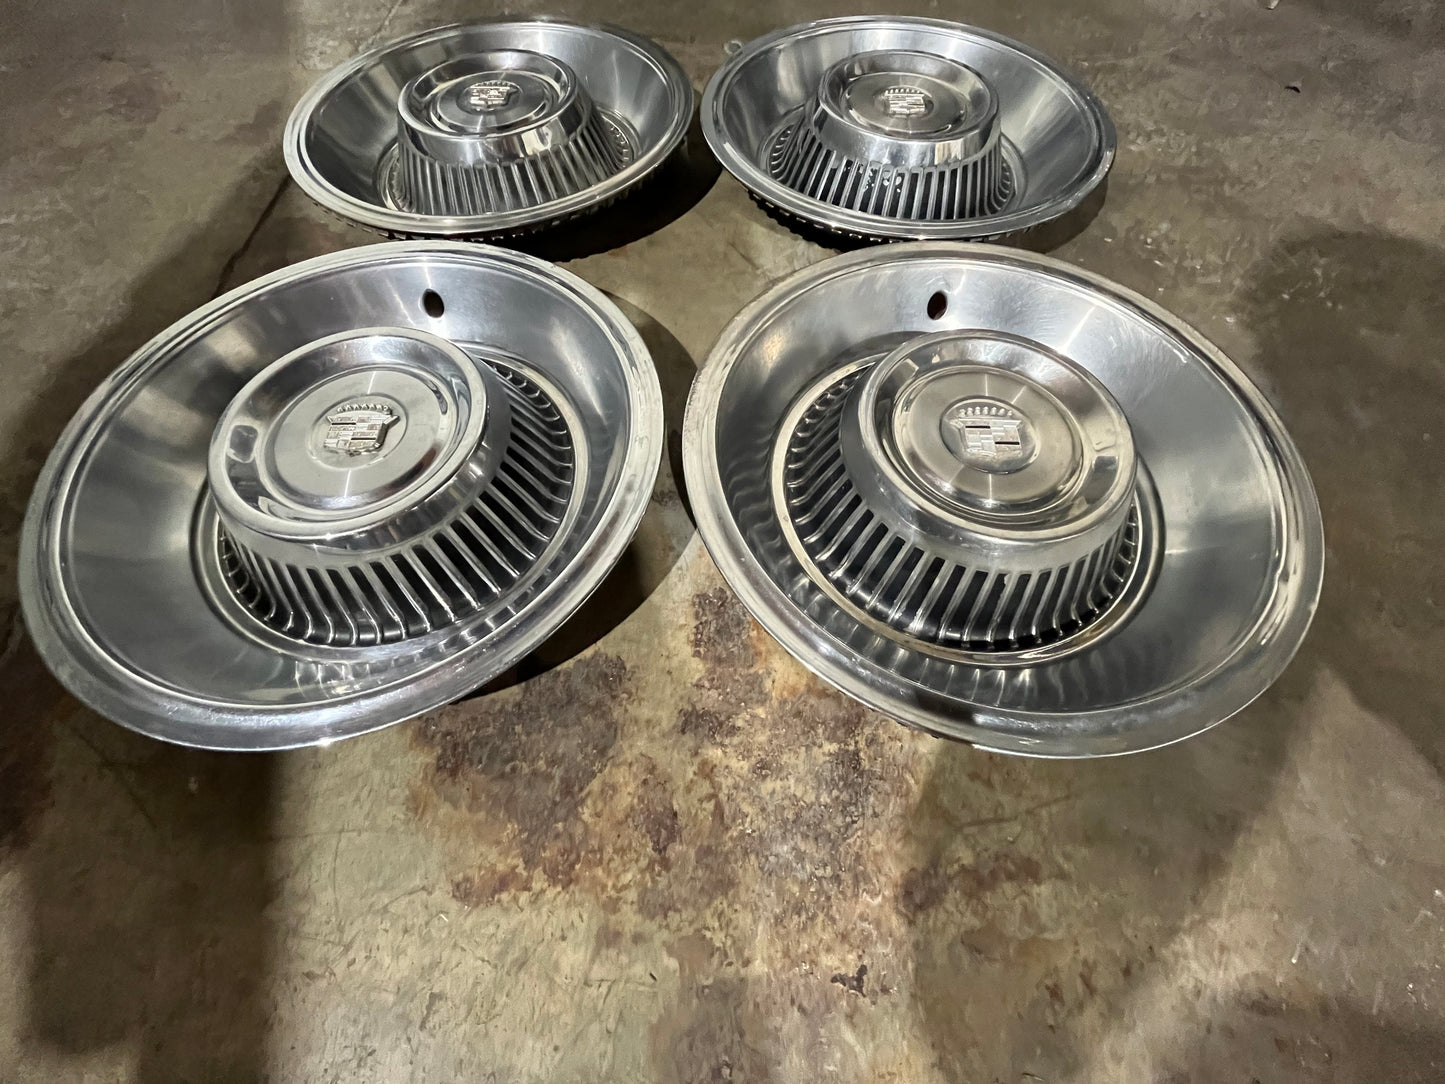 1963 Cadillac hubcaps